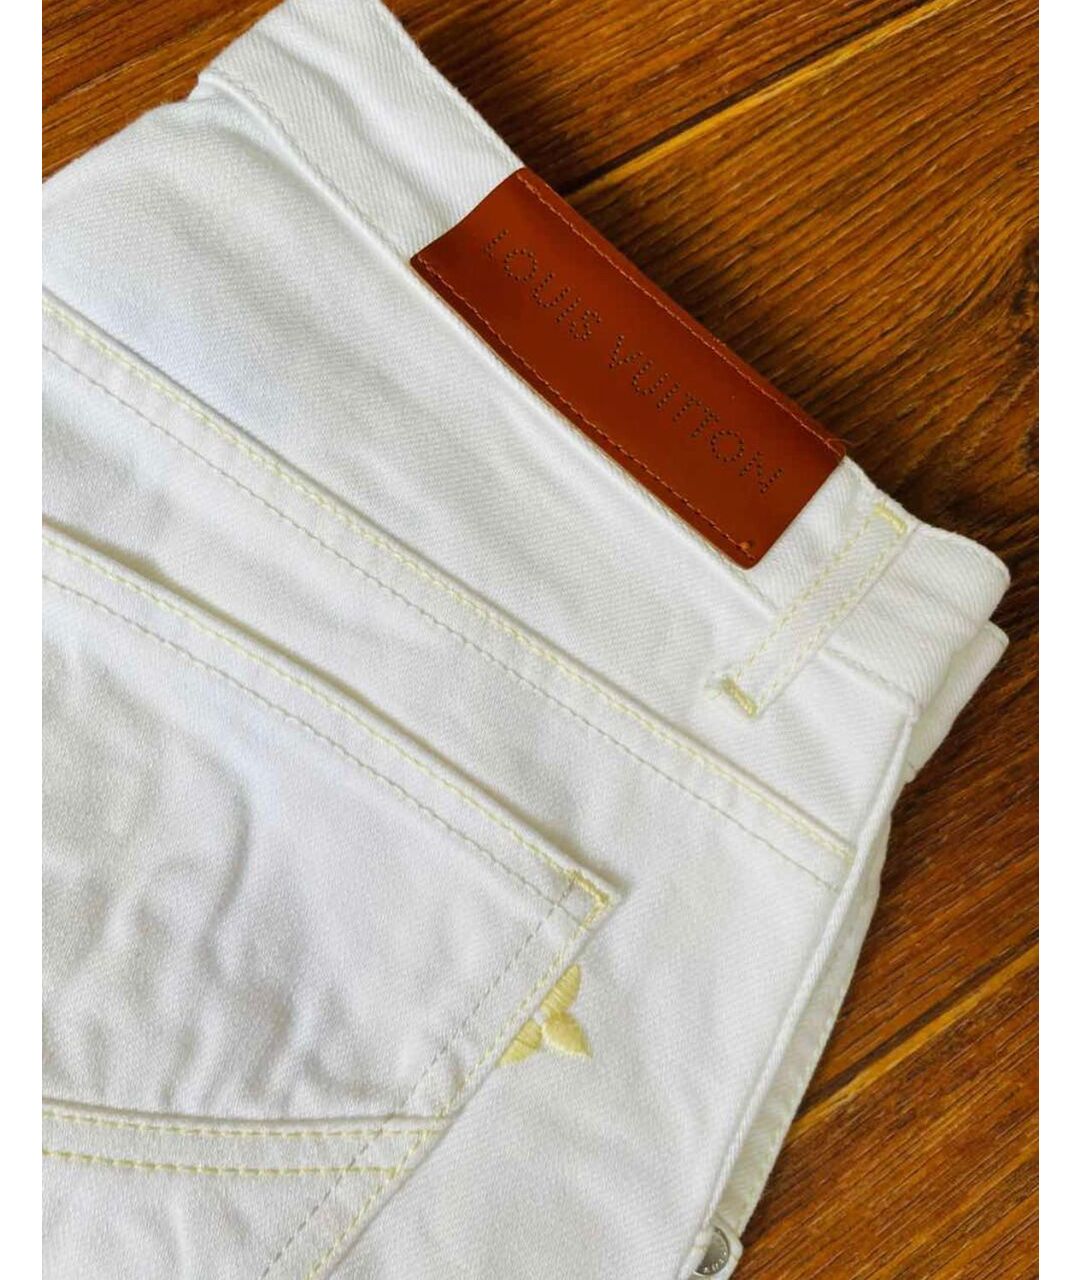 LOUIS VUITTON PRE-OWNED Белые хлопковые прямые джинсы, фото 2